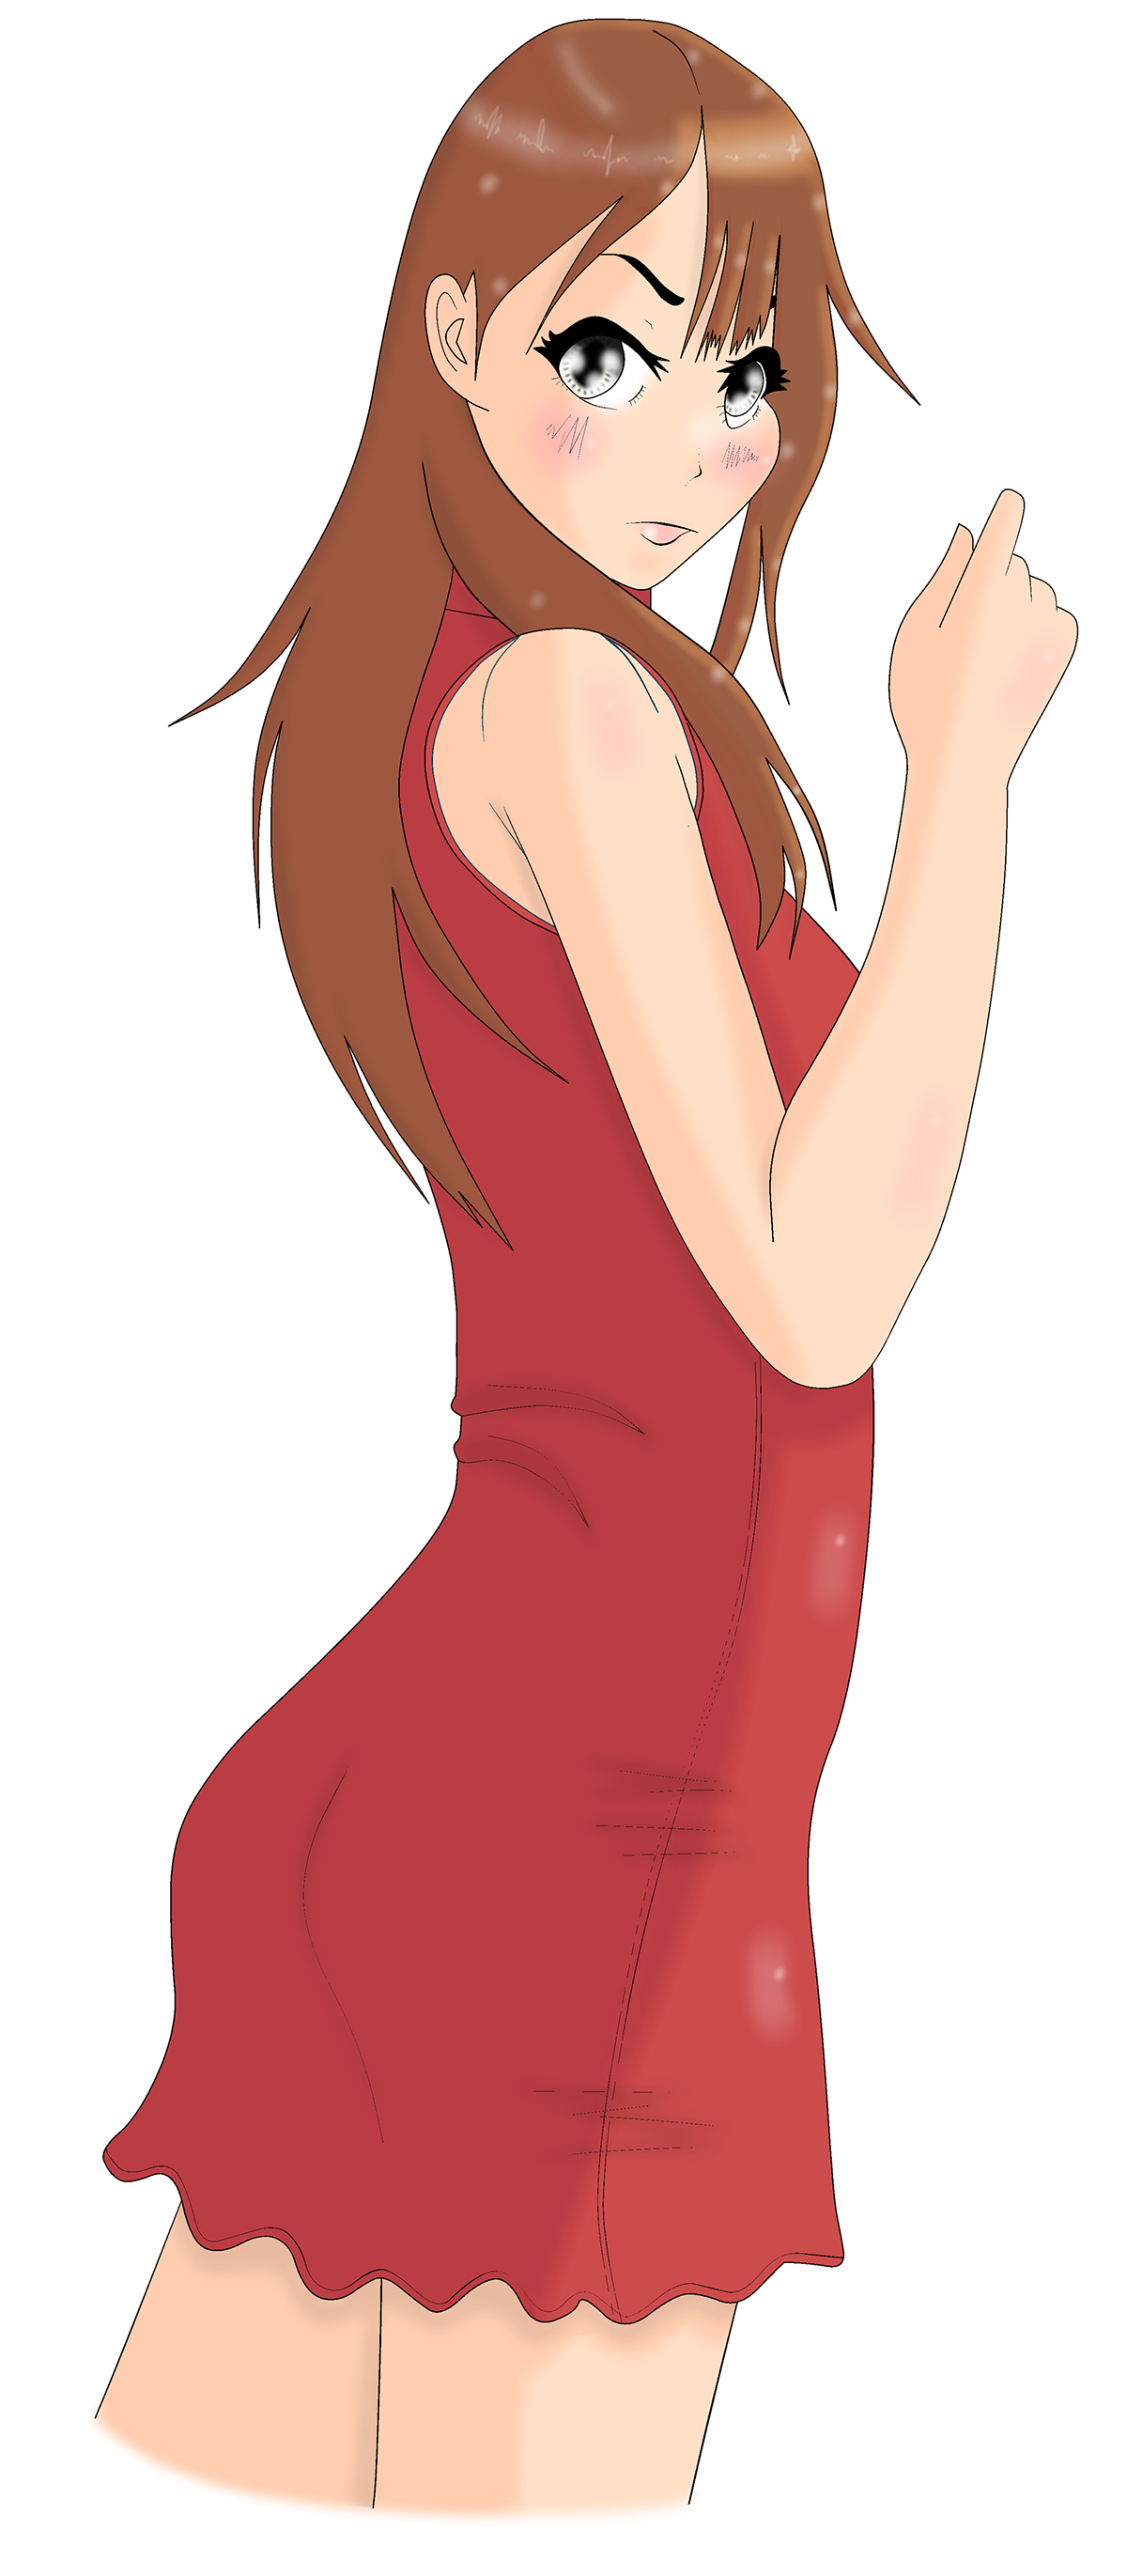 Manga Style girl red sleeveless dress sleeveless dress red dress